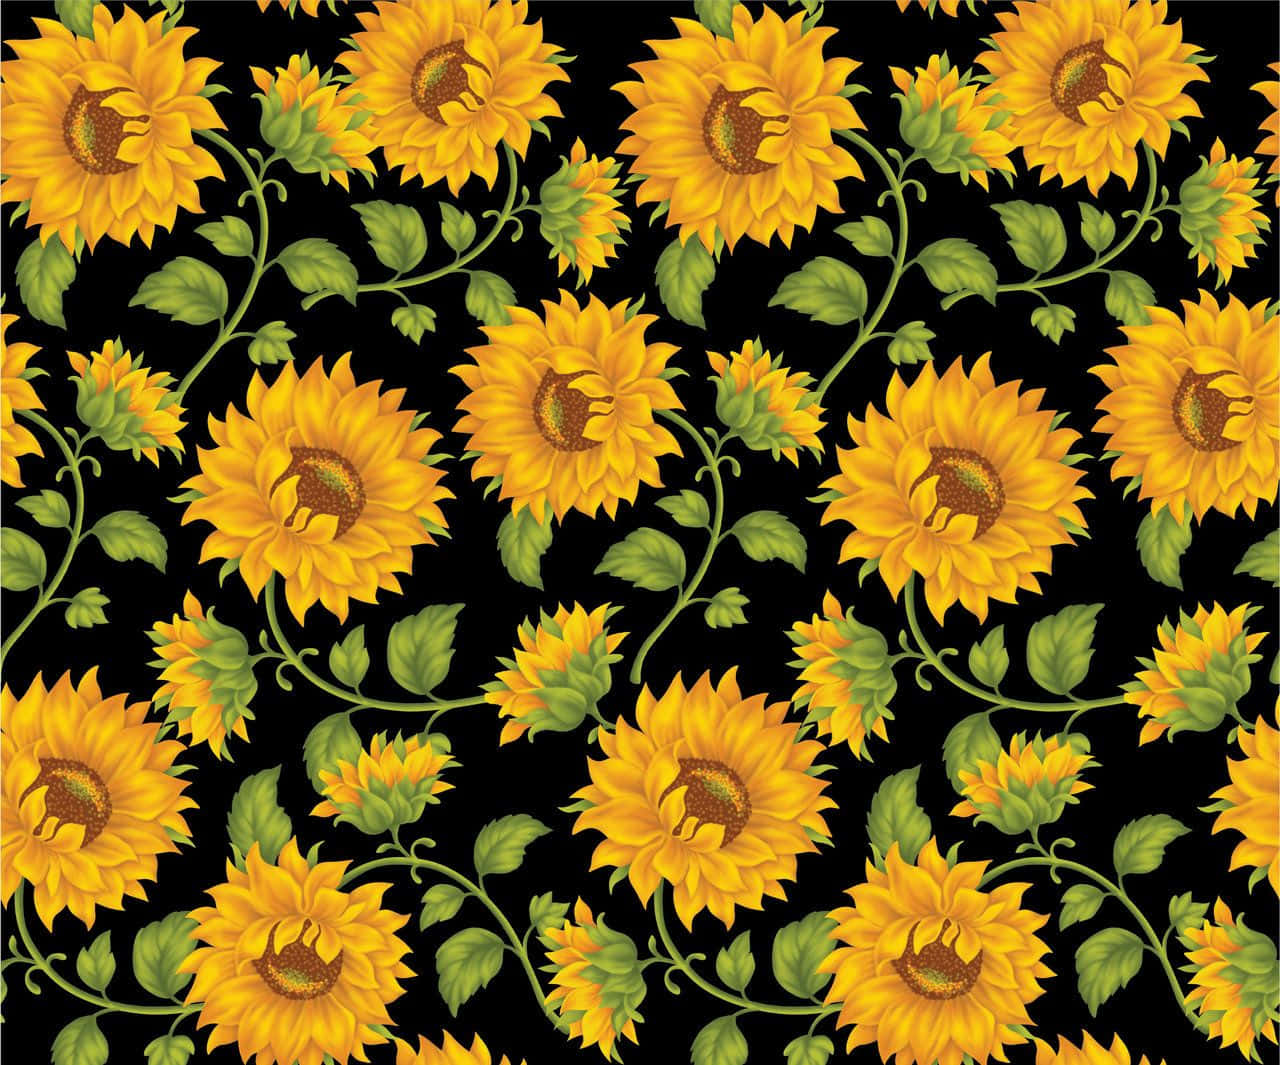 sunflowers on black background